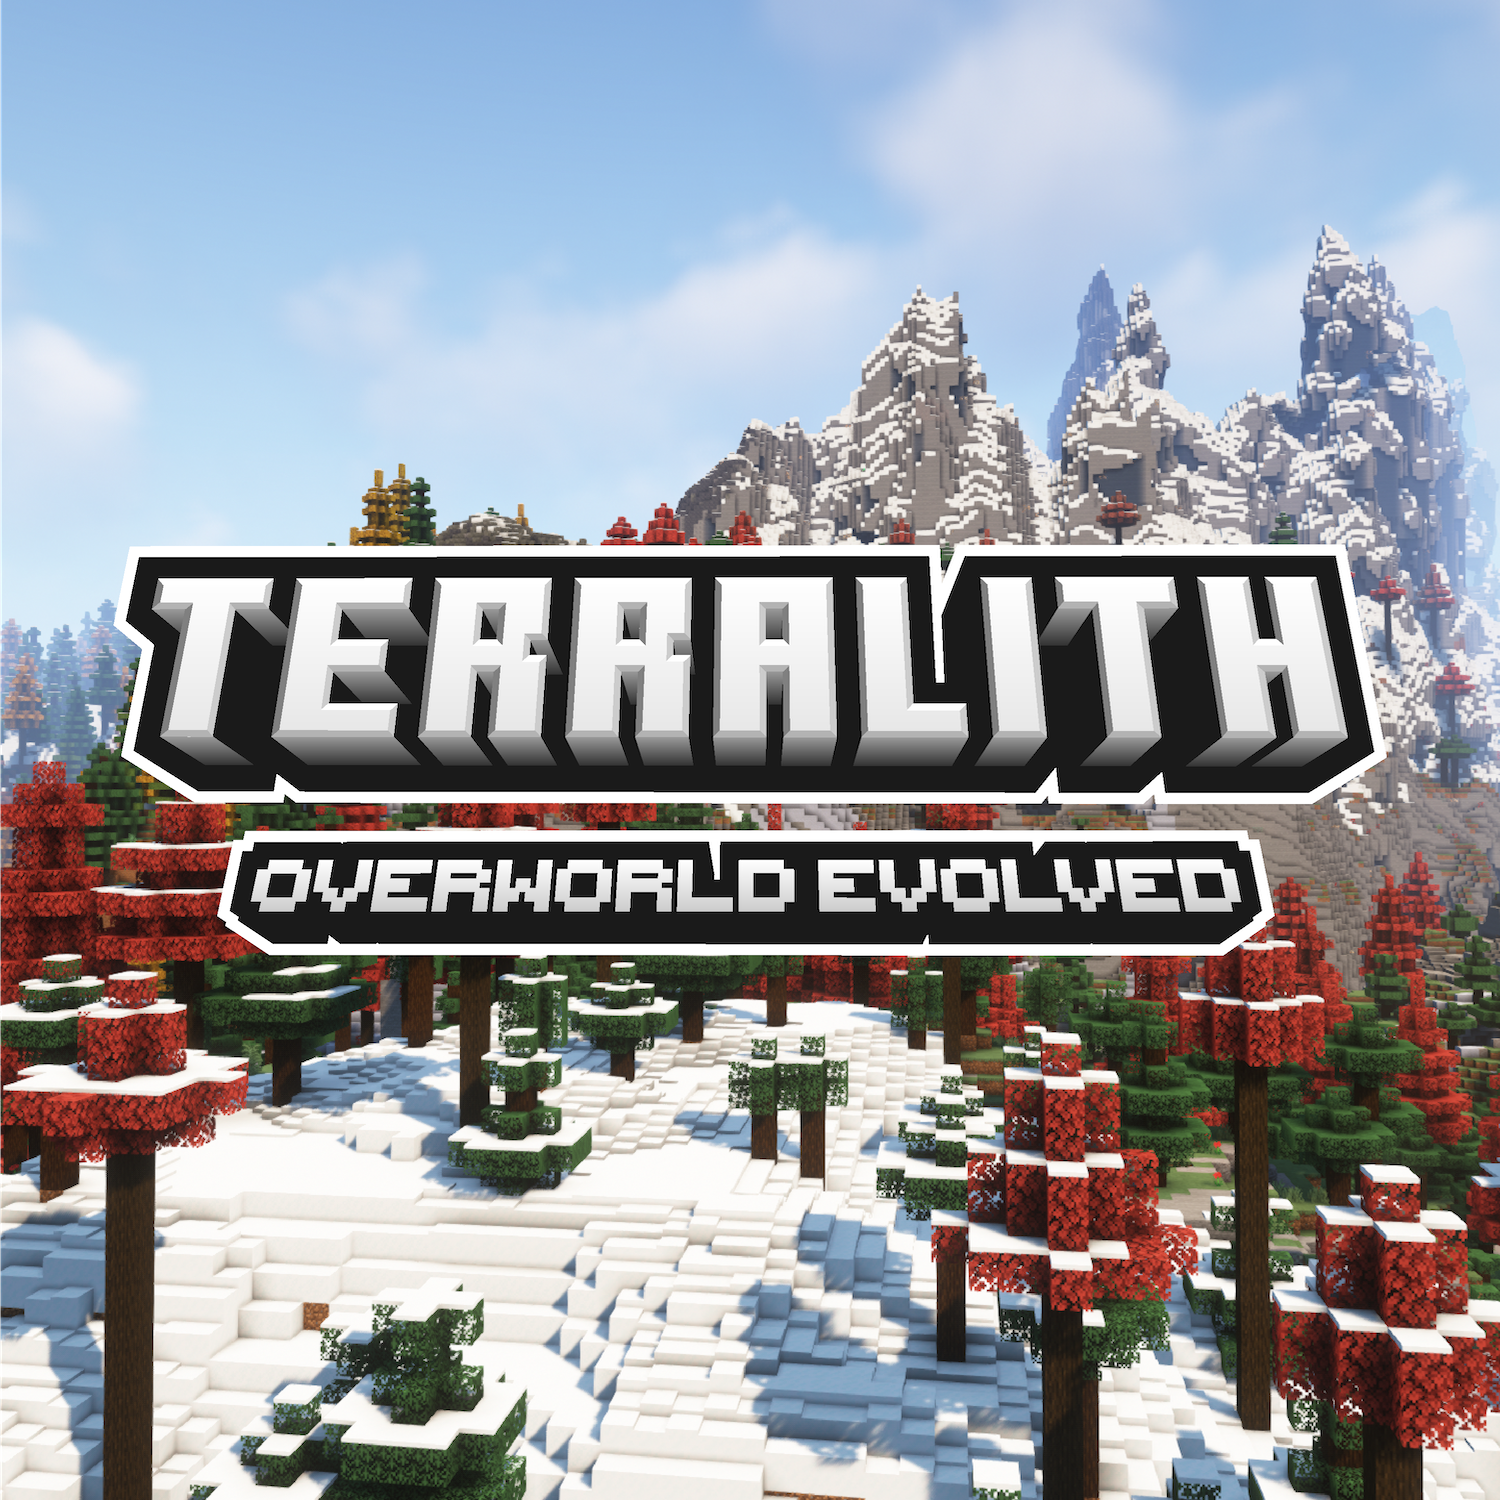 Terralith - Minecraft Mods - CurseForge